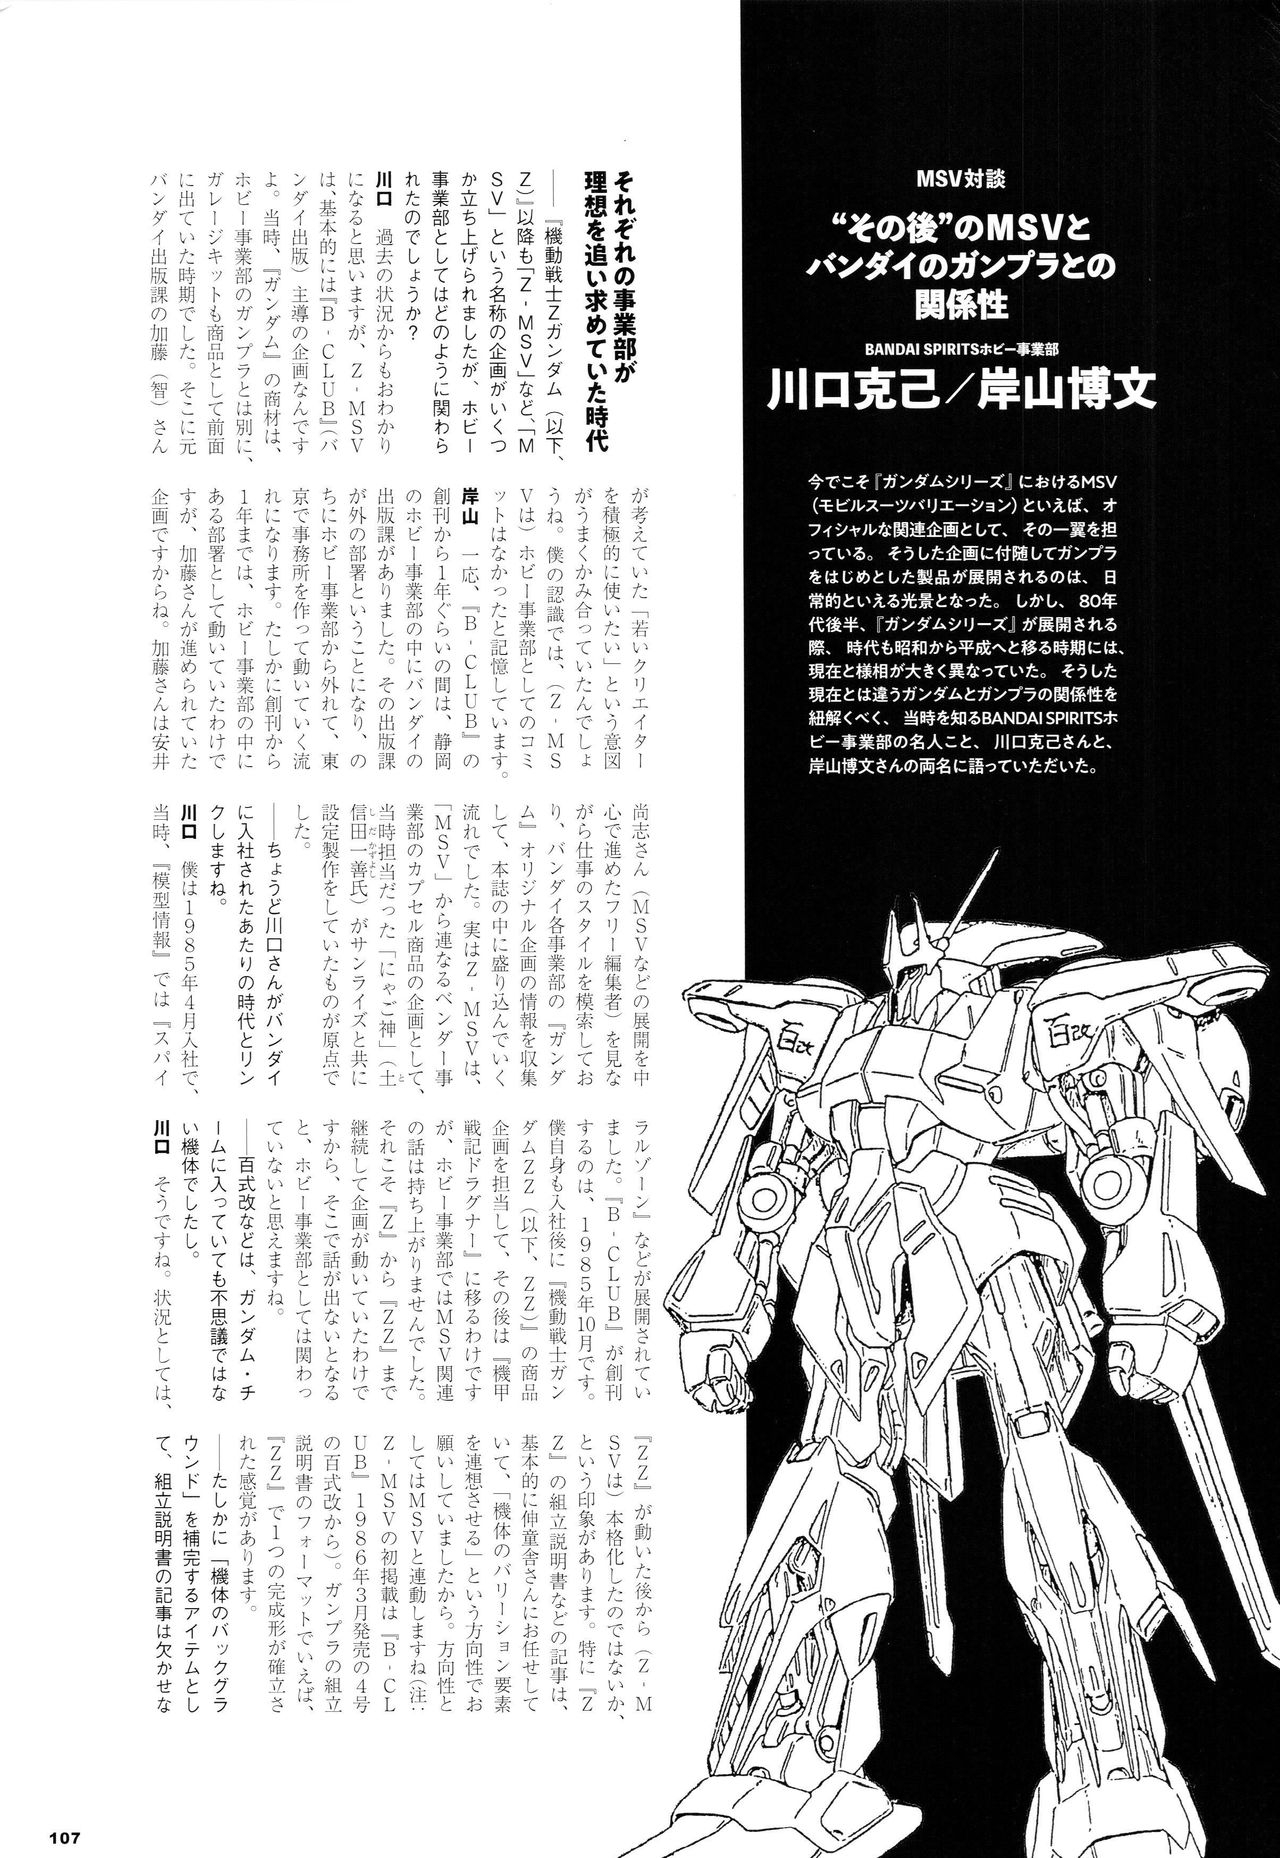 Mobile Suit Gundam - MSV The Second - Generation 1986-1993 106